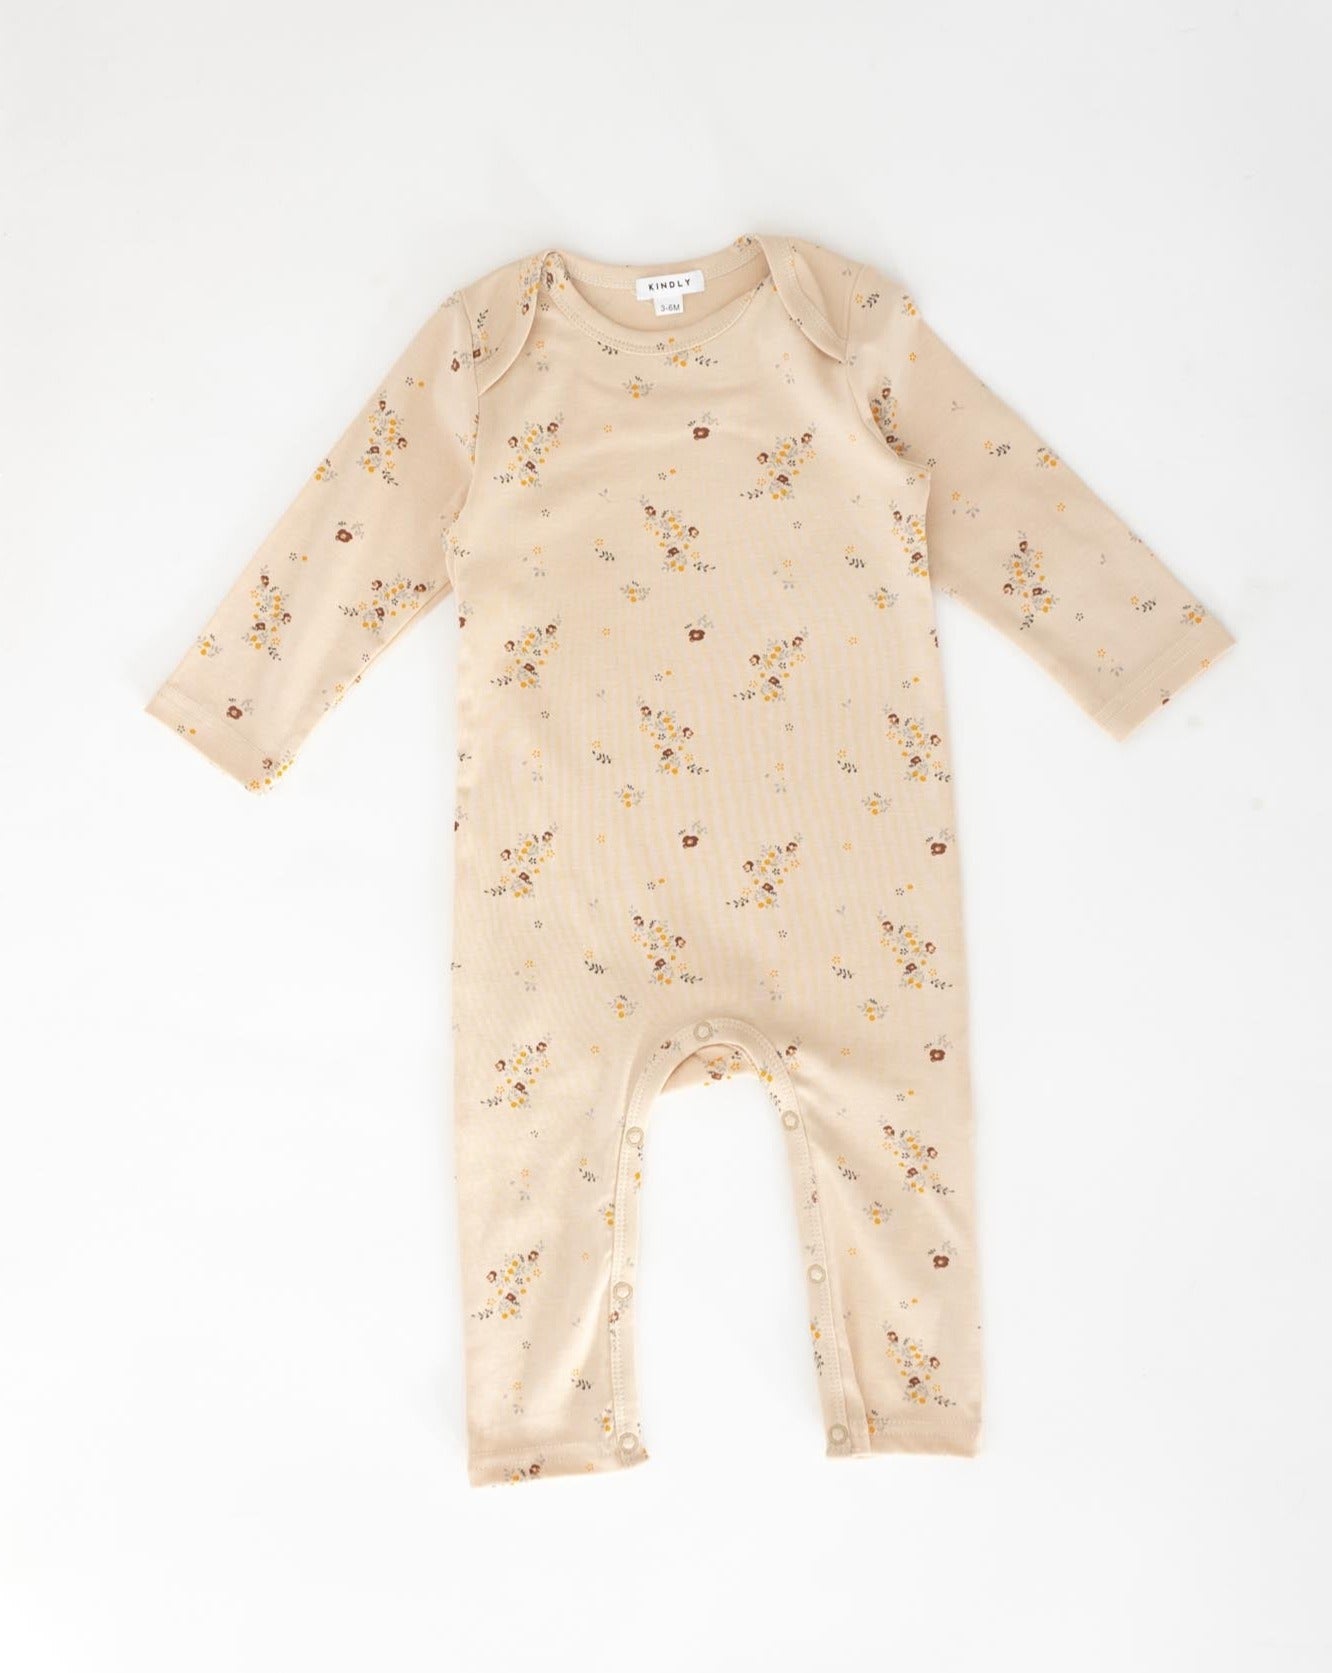 orchard baby sleepsuits